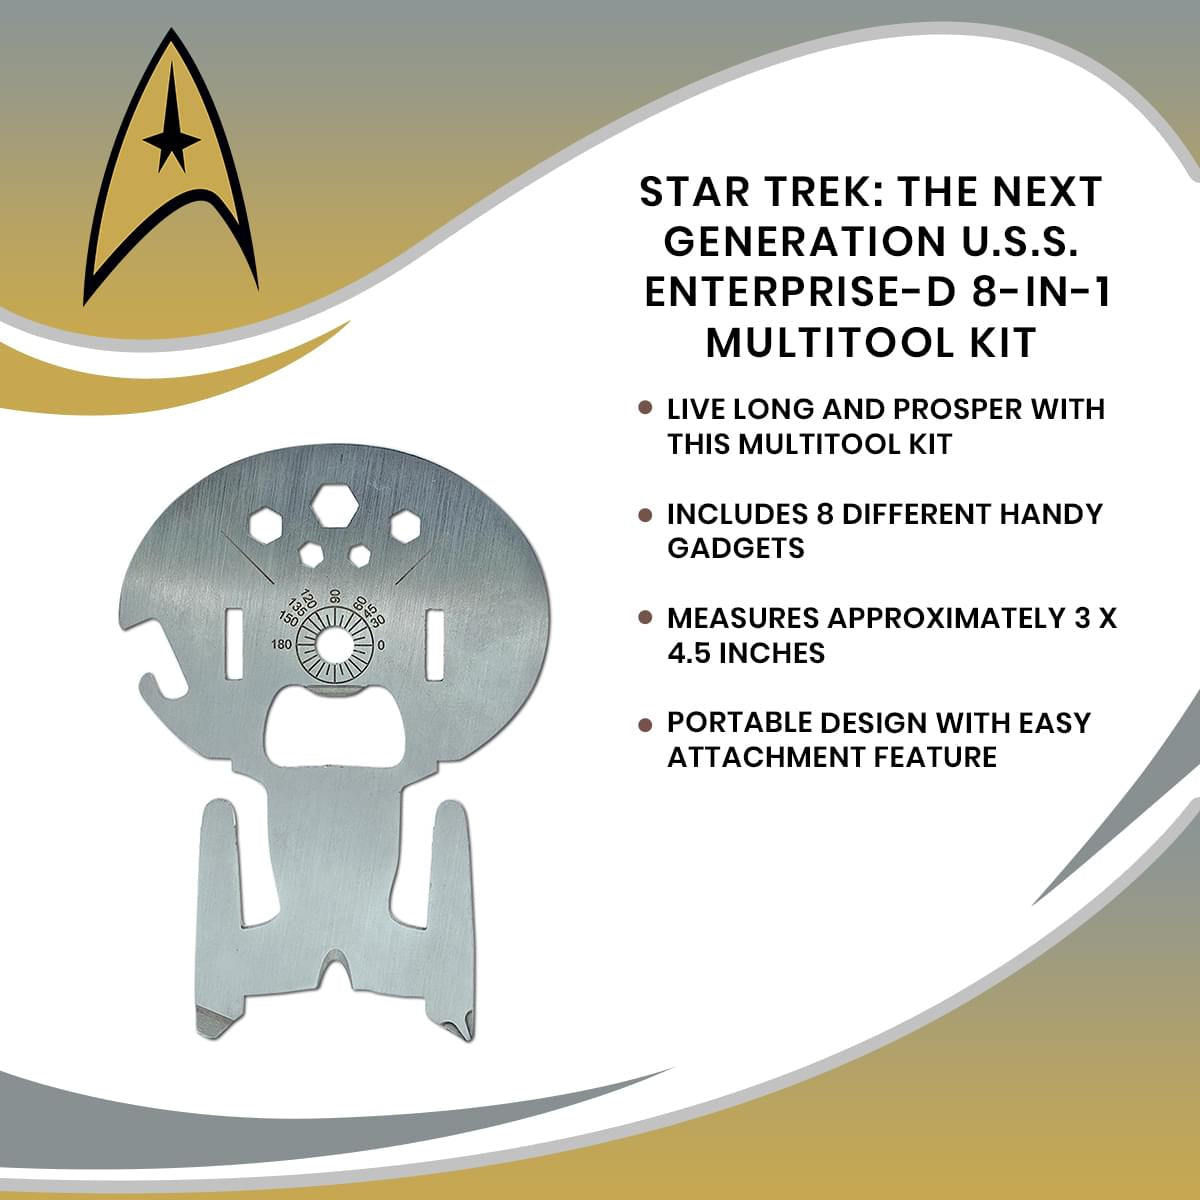 Star Trek: The Next Generation U.S.S. Enterprise-D 8-In-1 Multitool Kit